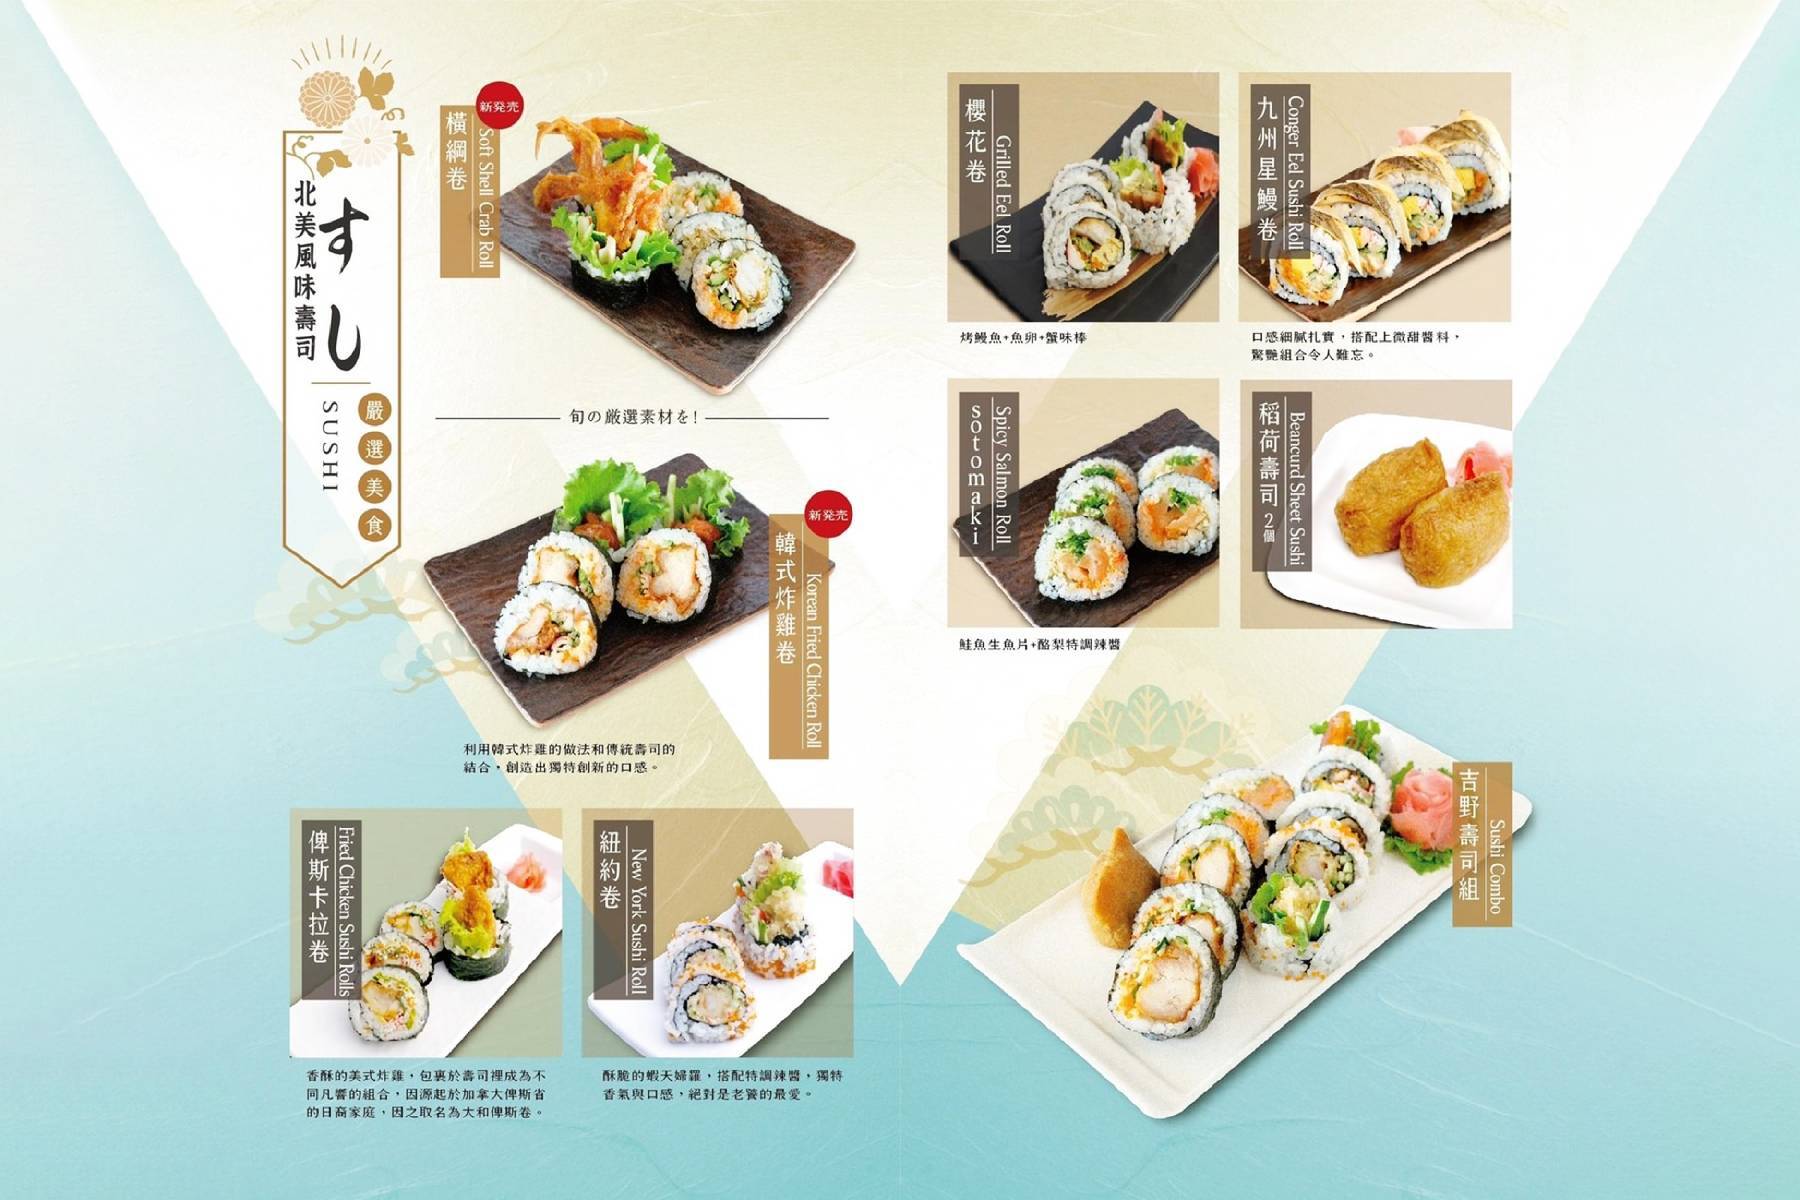 ●Soto日式精緻料理-平日午餐A餐吃到飽8